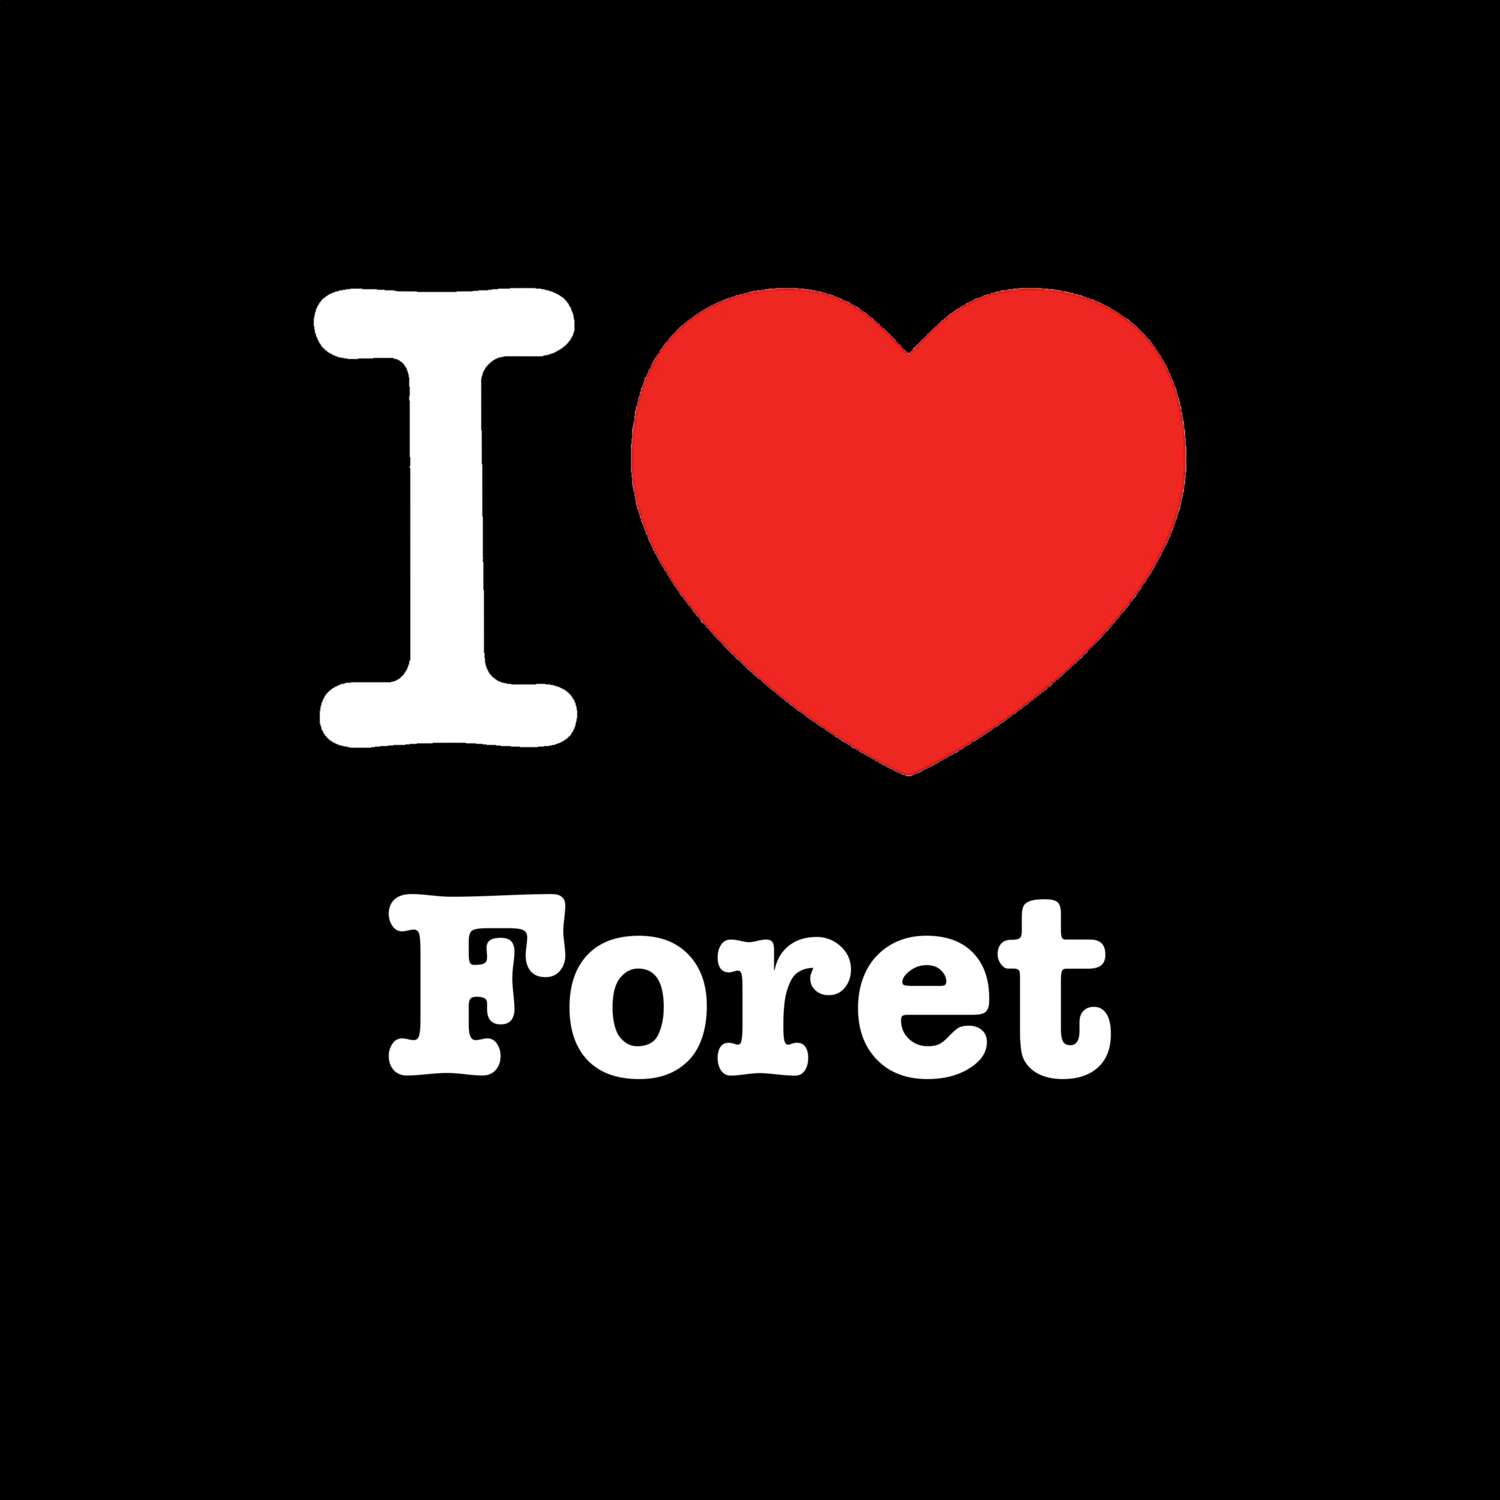 Foret T-Shirt »I love«